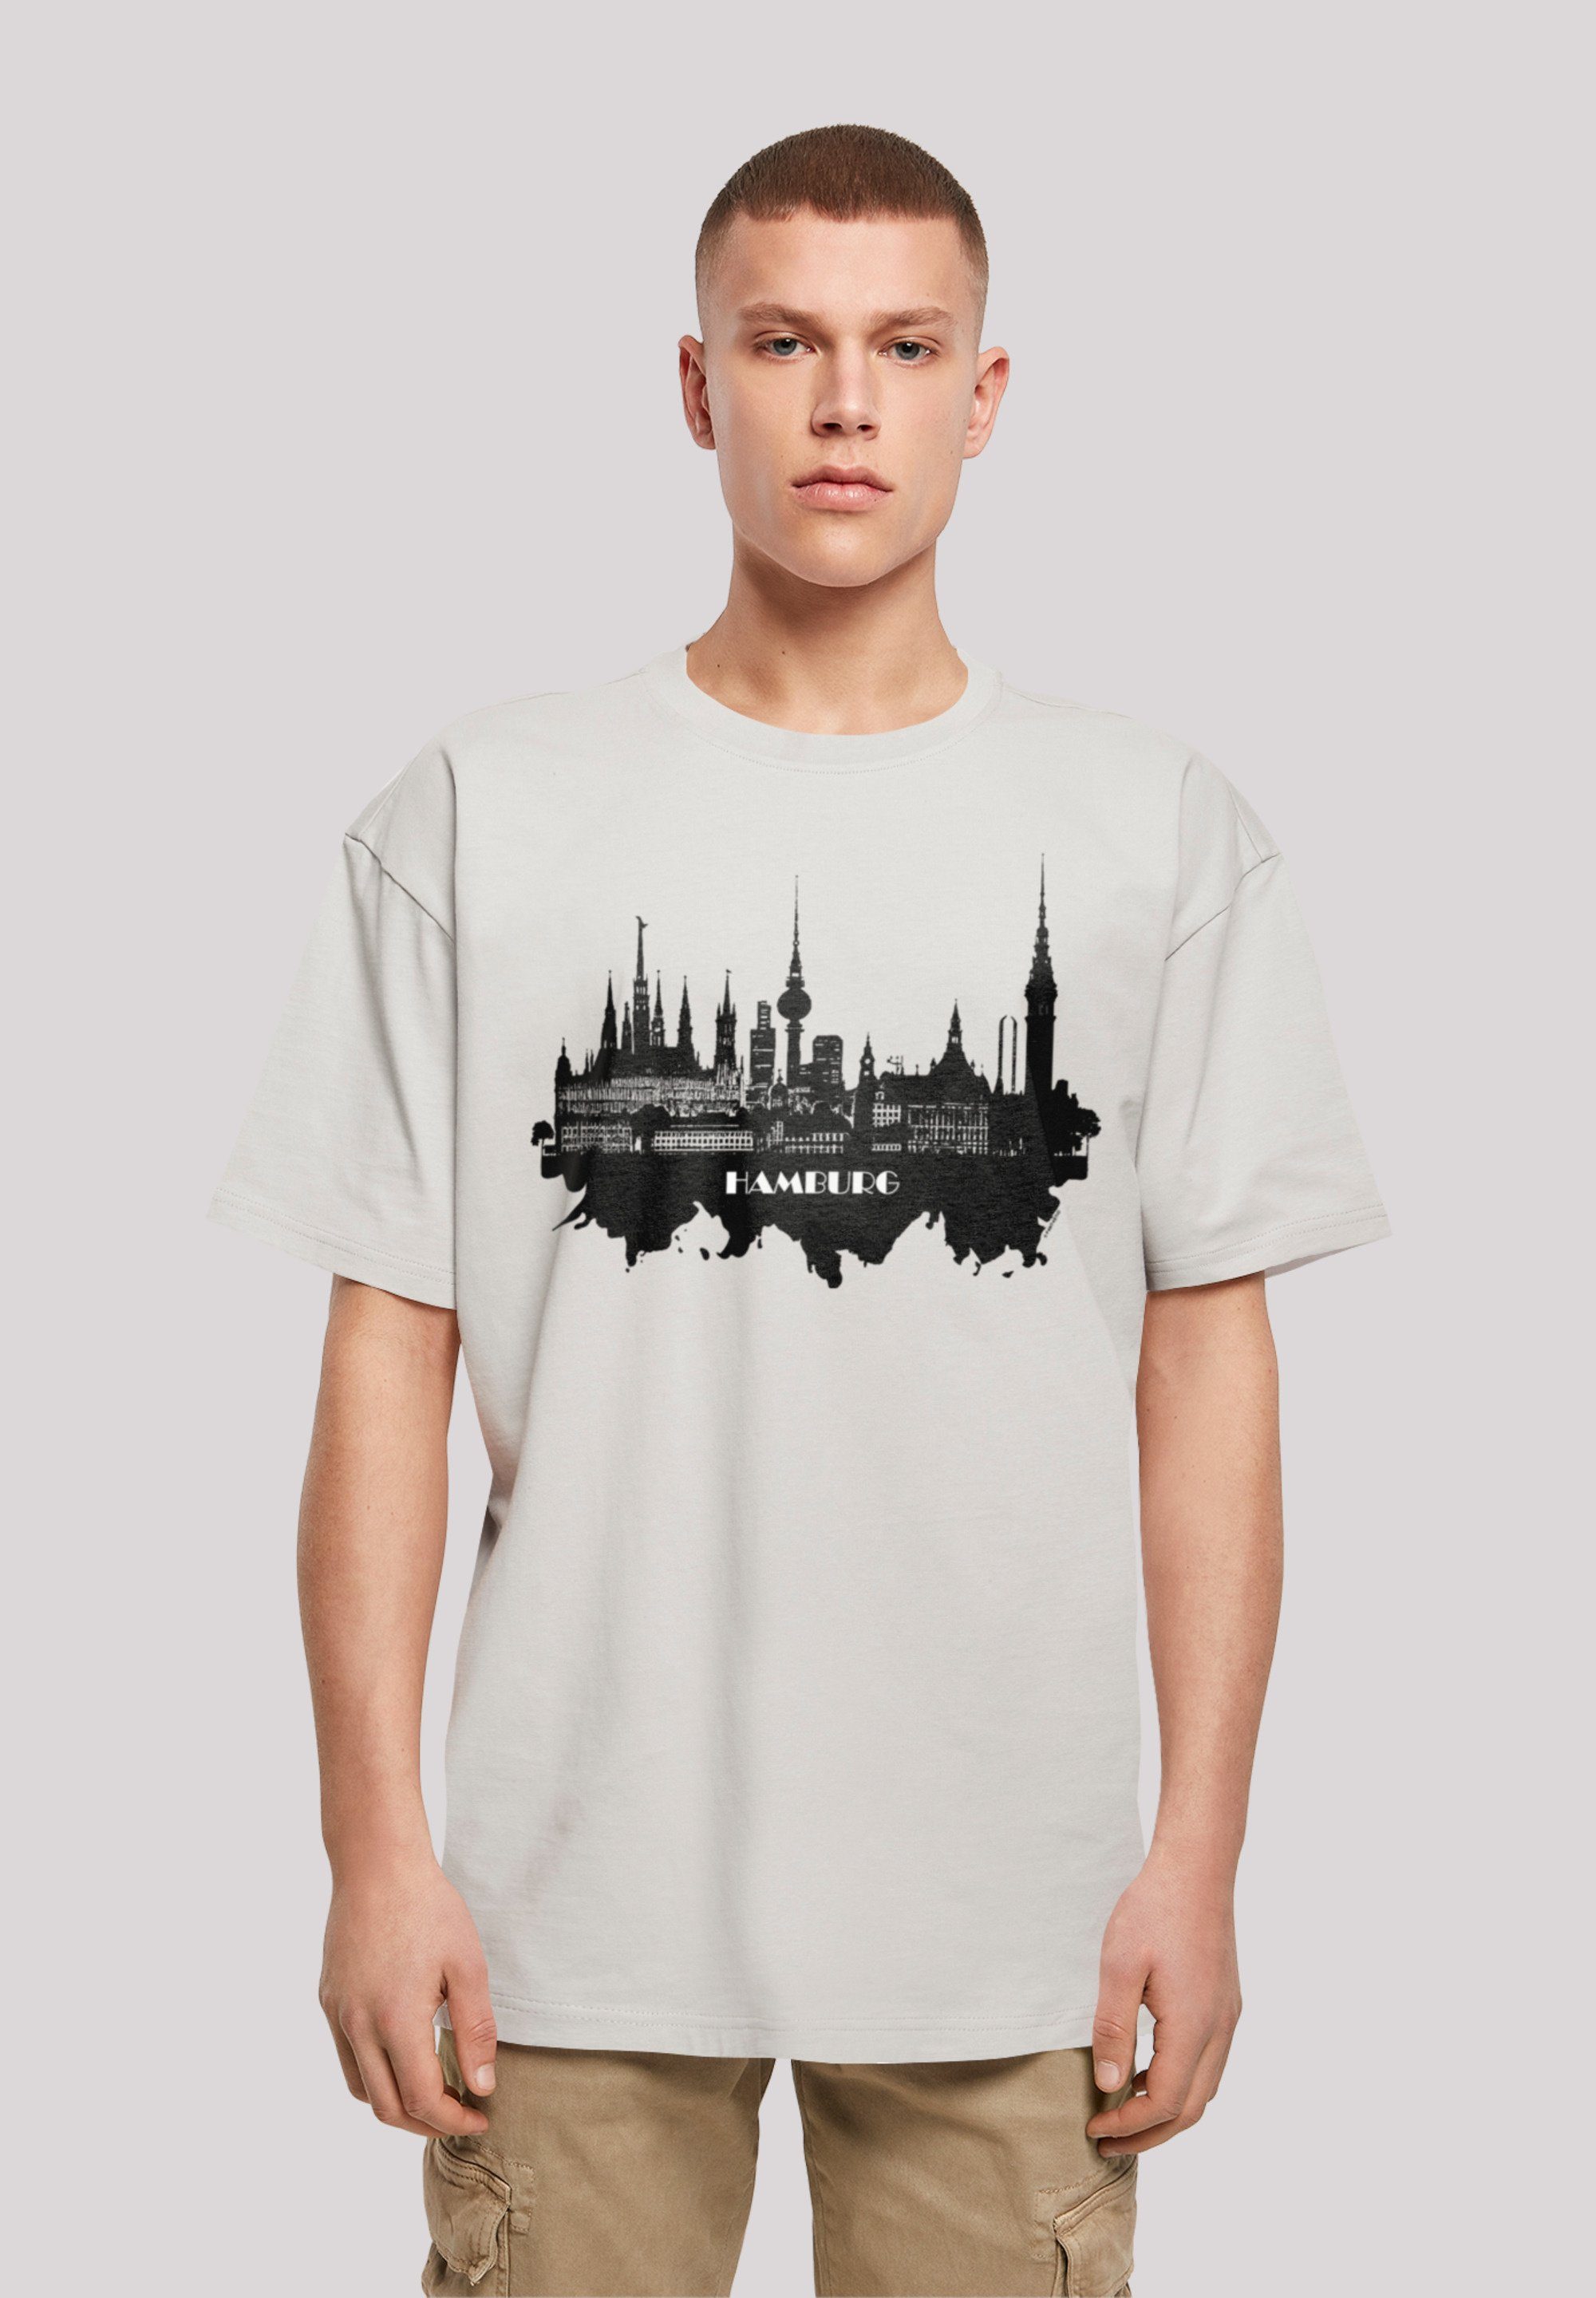 Neu eingeführt F4NT4STIC T-Shirt Cities skyline - Print Collection lightasphalt Hamburg